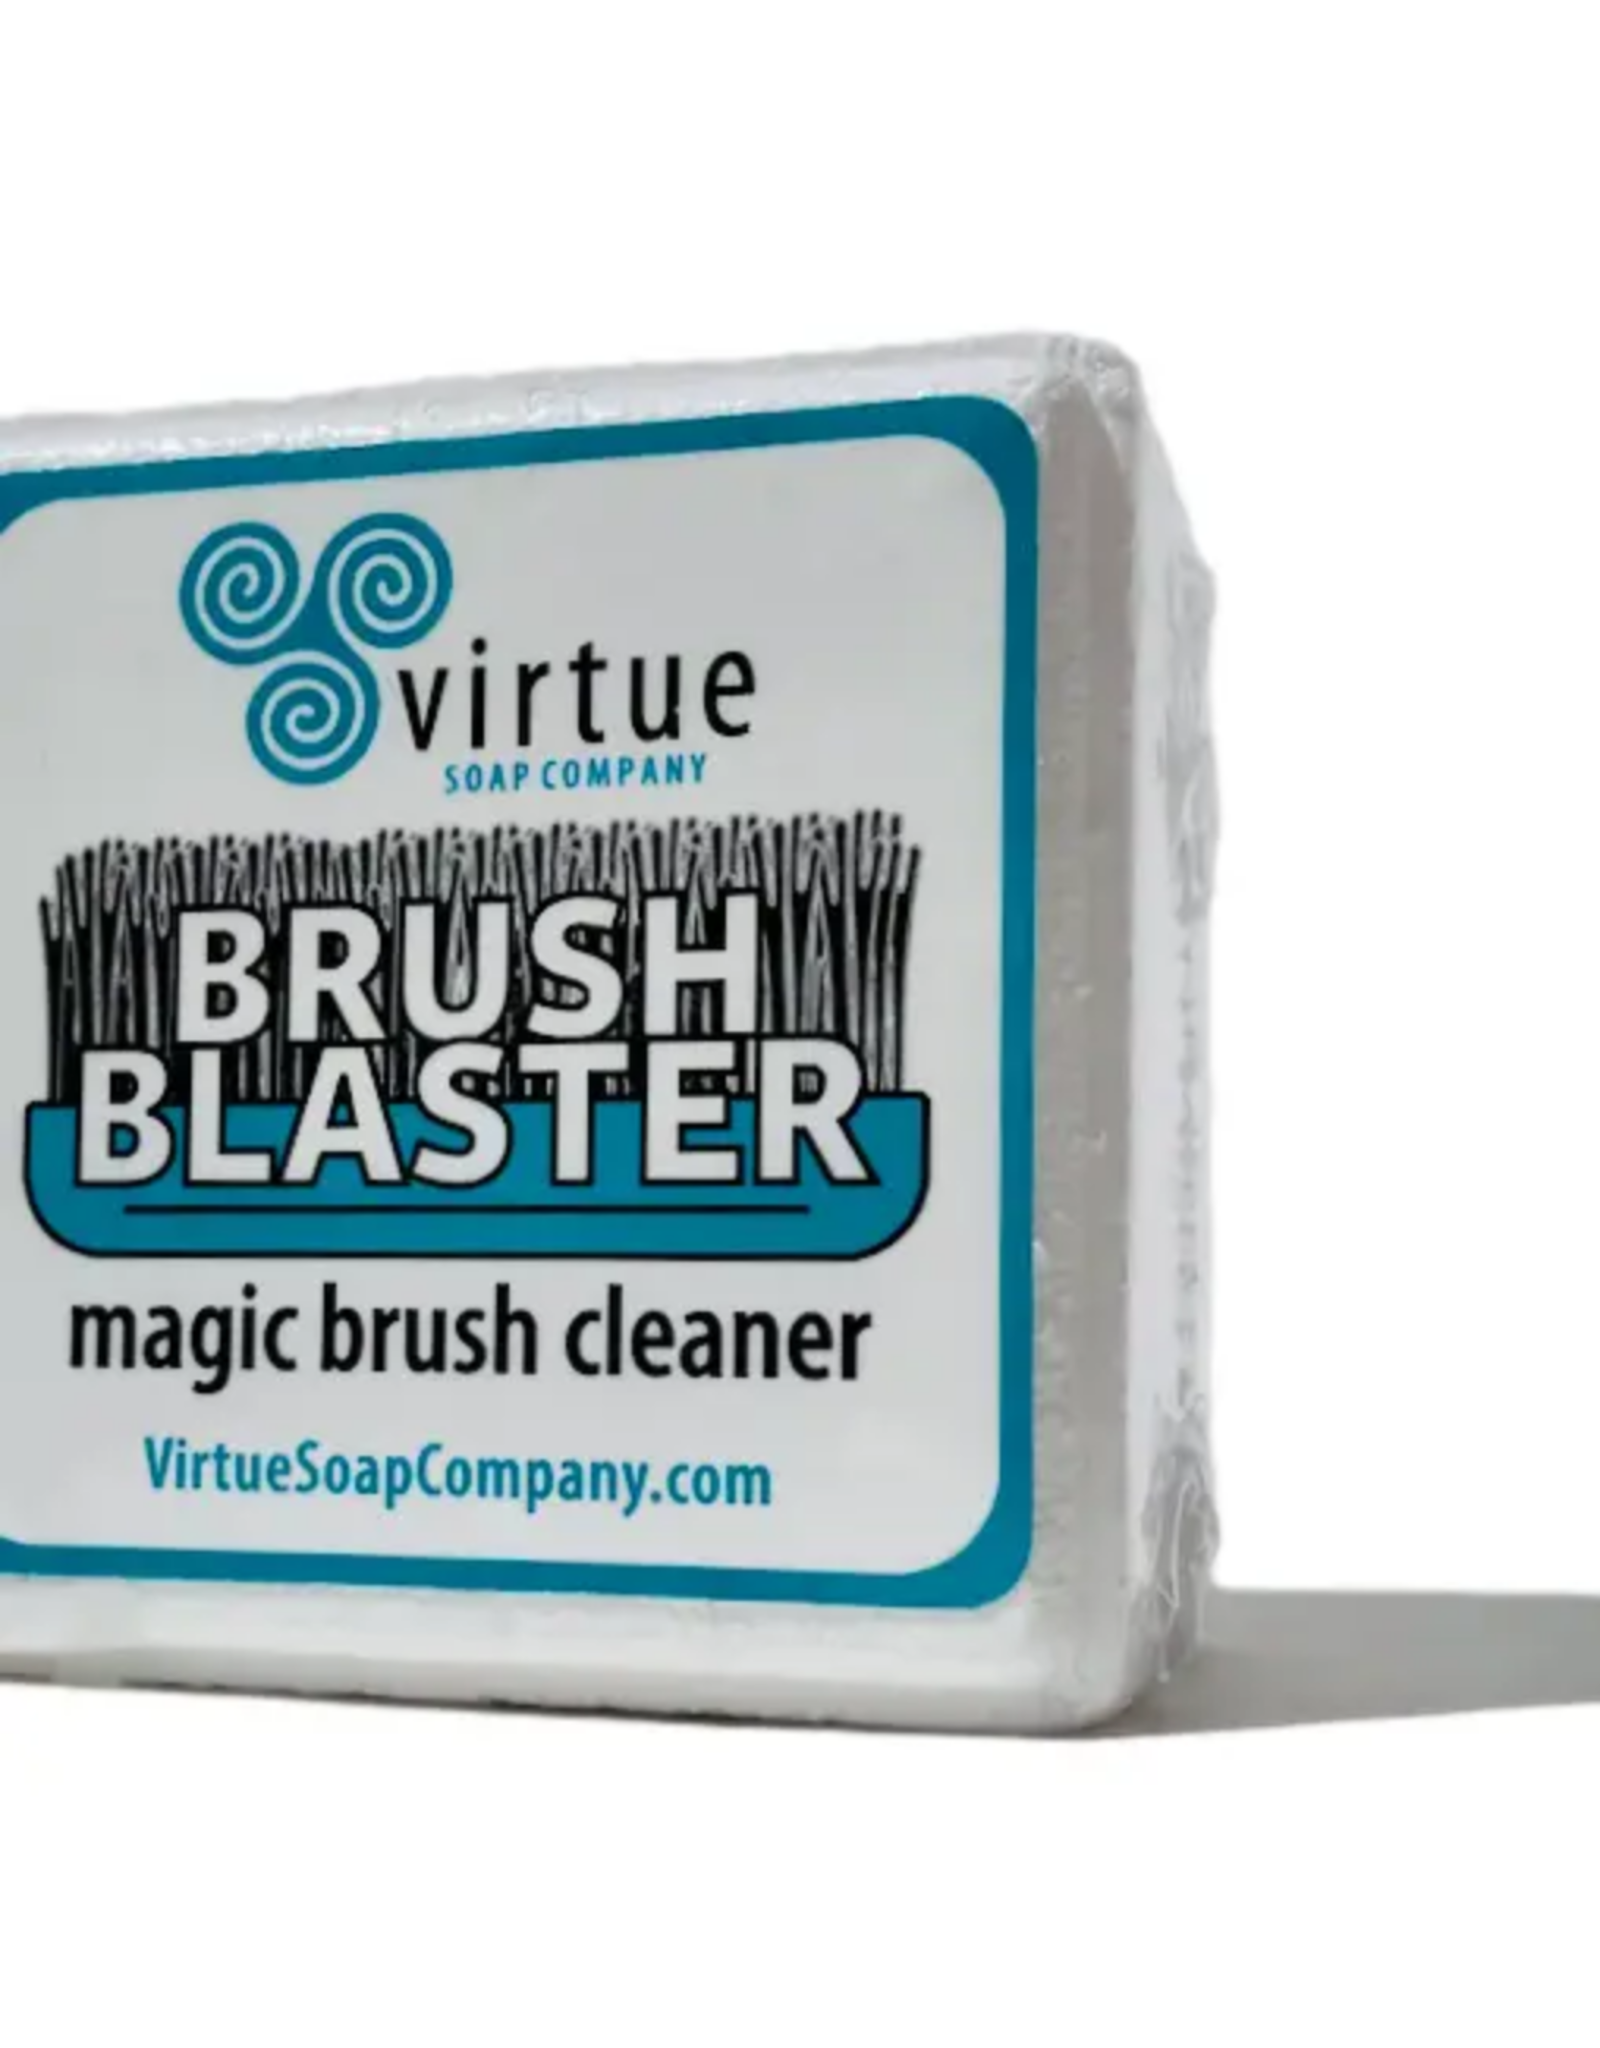 Virtue Soap Company Brush Blaster Magic Brush Cleaner It's the Bomb!